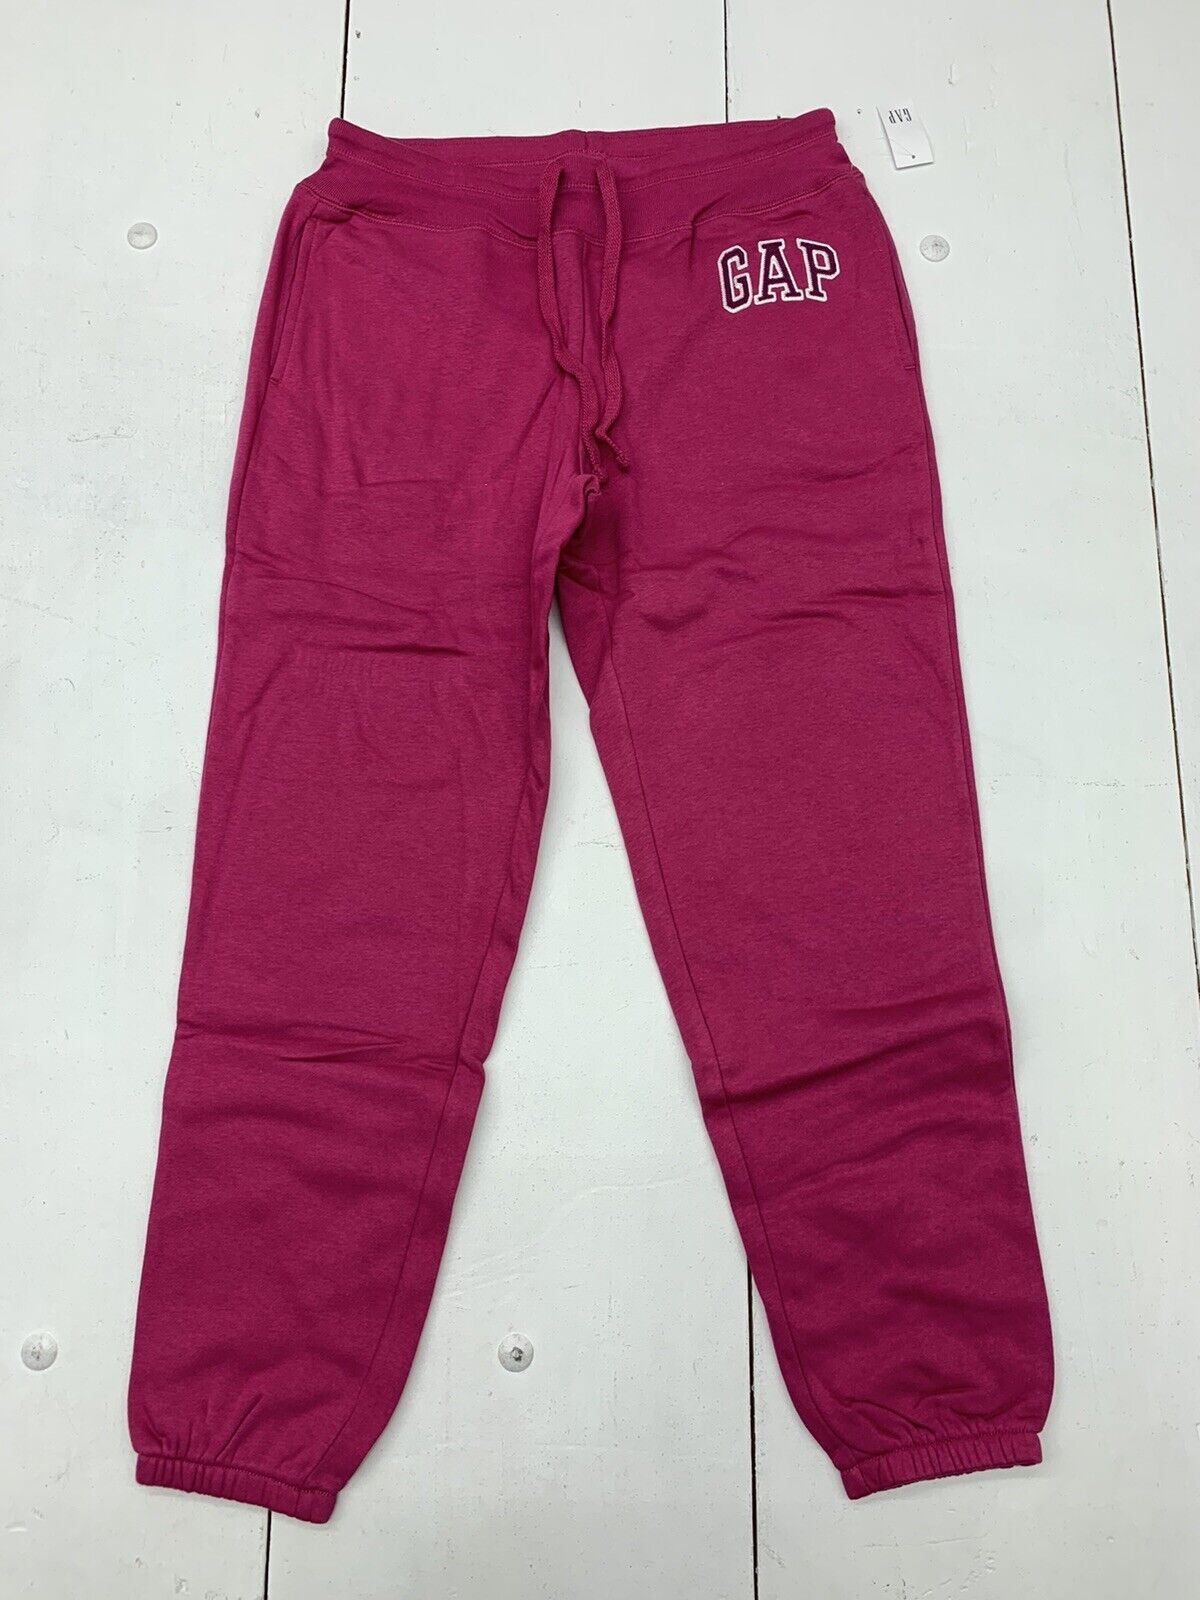 Gap Womens Pink Sweatpants Size Small - beyond exchange